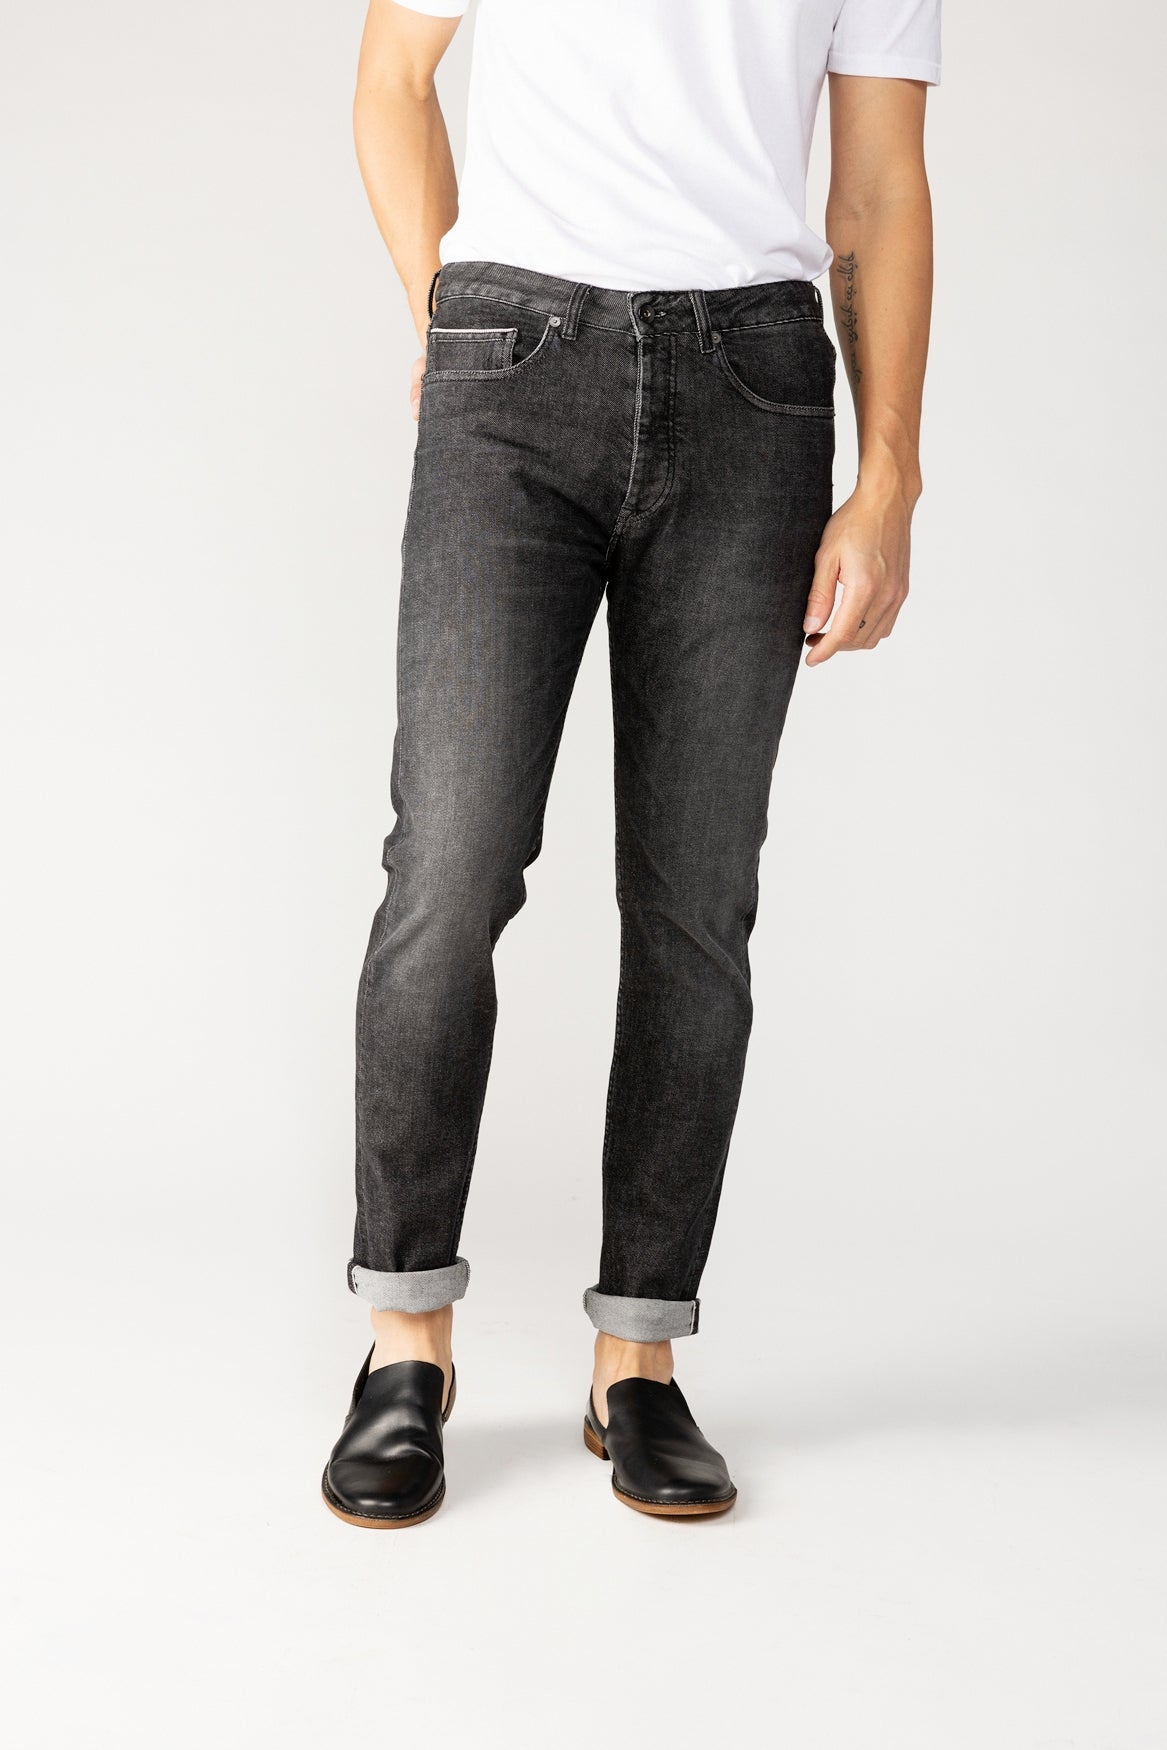 Italian Denim Indigo Wash Whisker Jeans : Made To Measure Custom Jeans For  Men & Women, MakeYourOwnJeans®